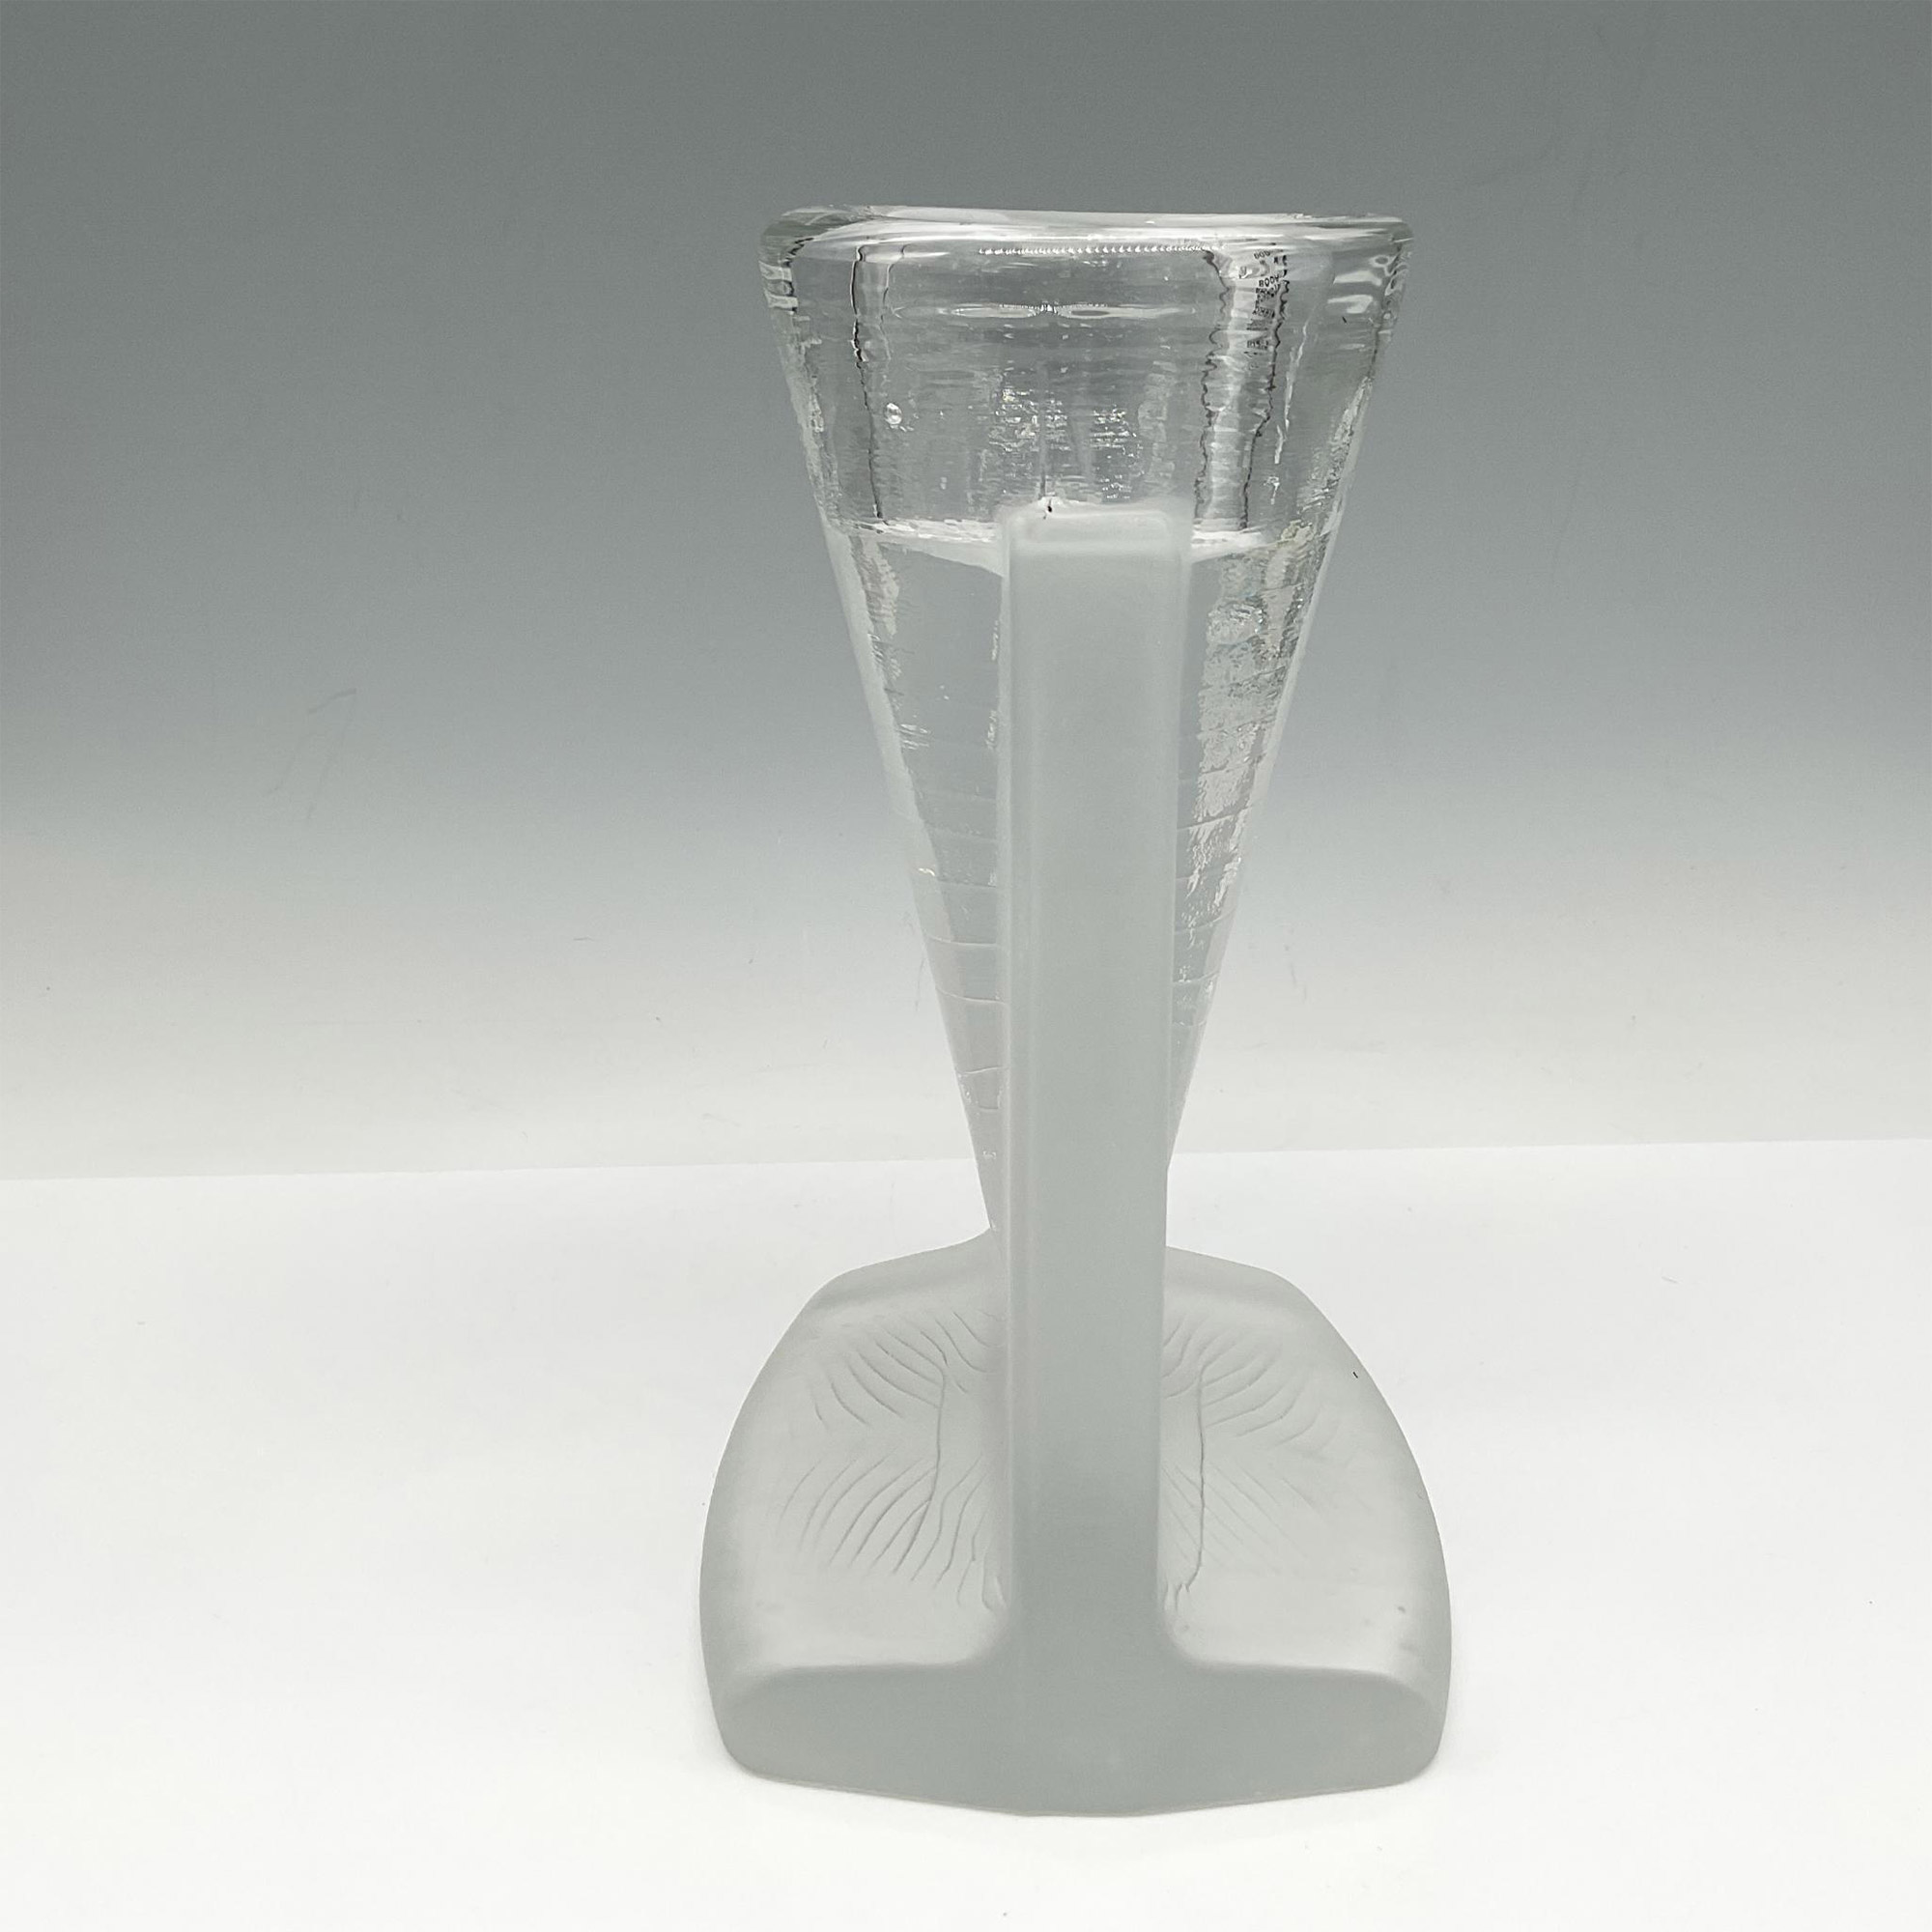 Kosta Boda Glass Candle Holder, Ice Age - Image 2 of 4